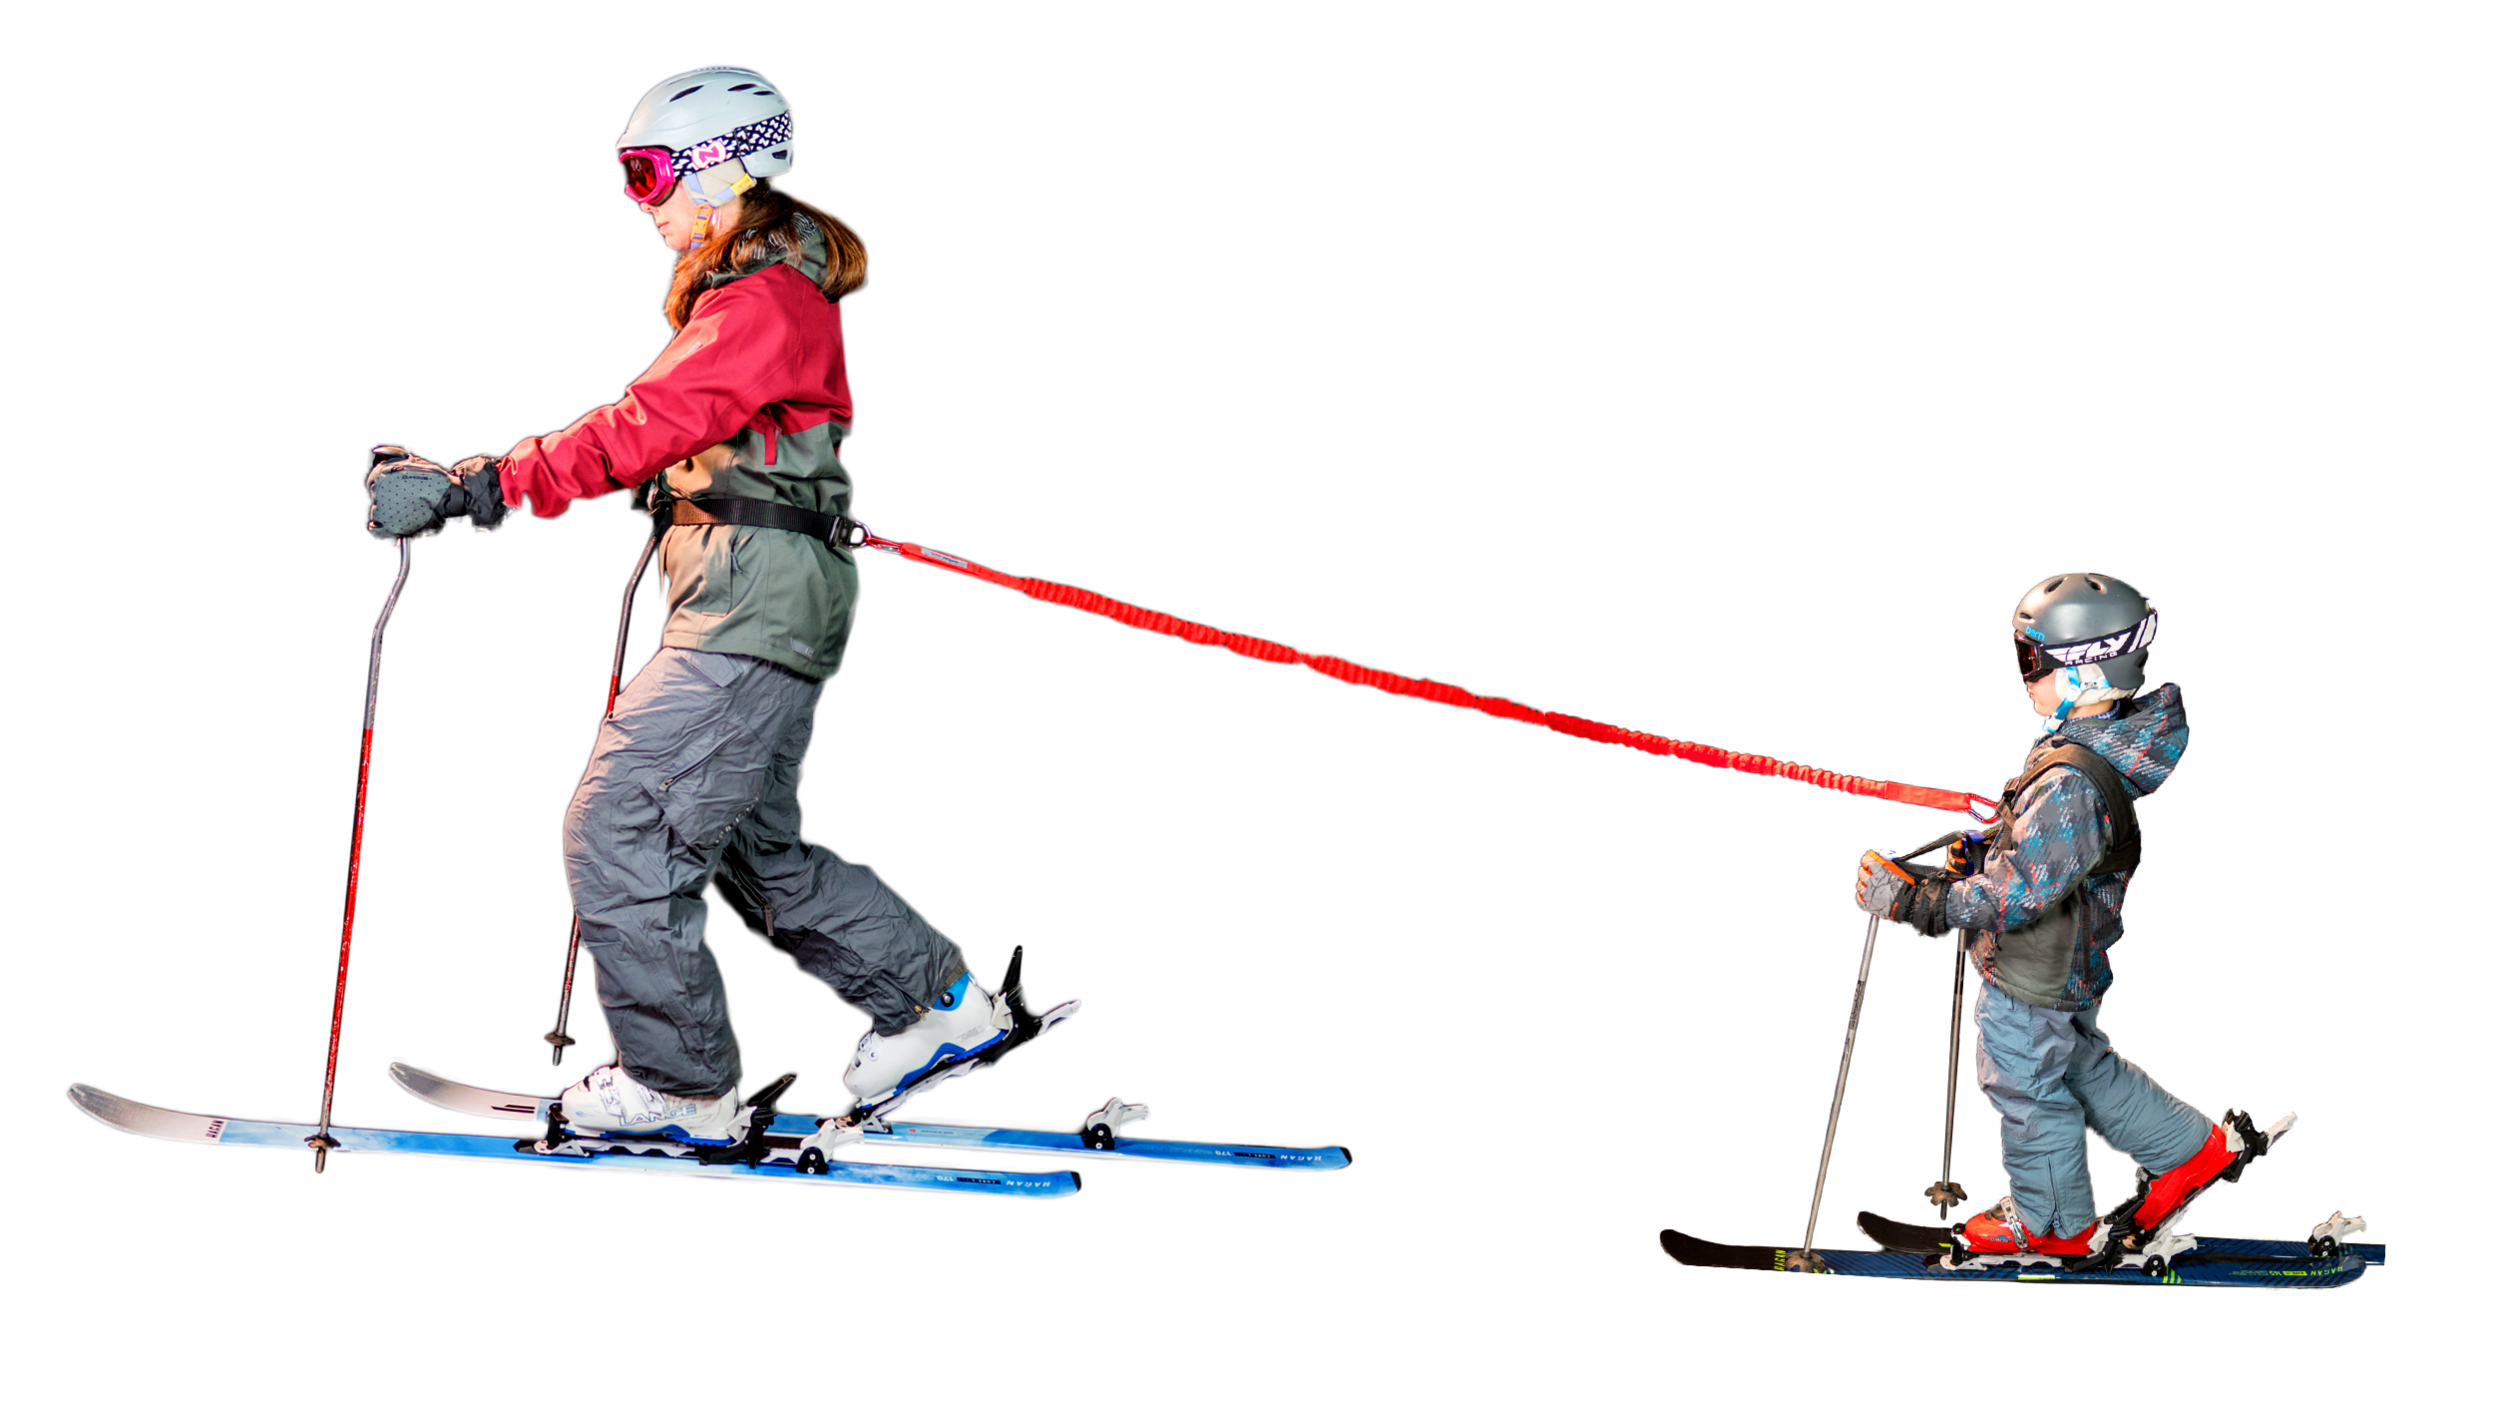 Backpack BCP Kids Adjustable Ski Training Harness w/ Leashes 